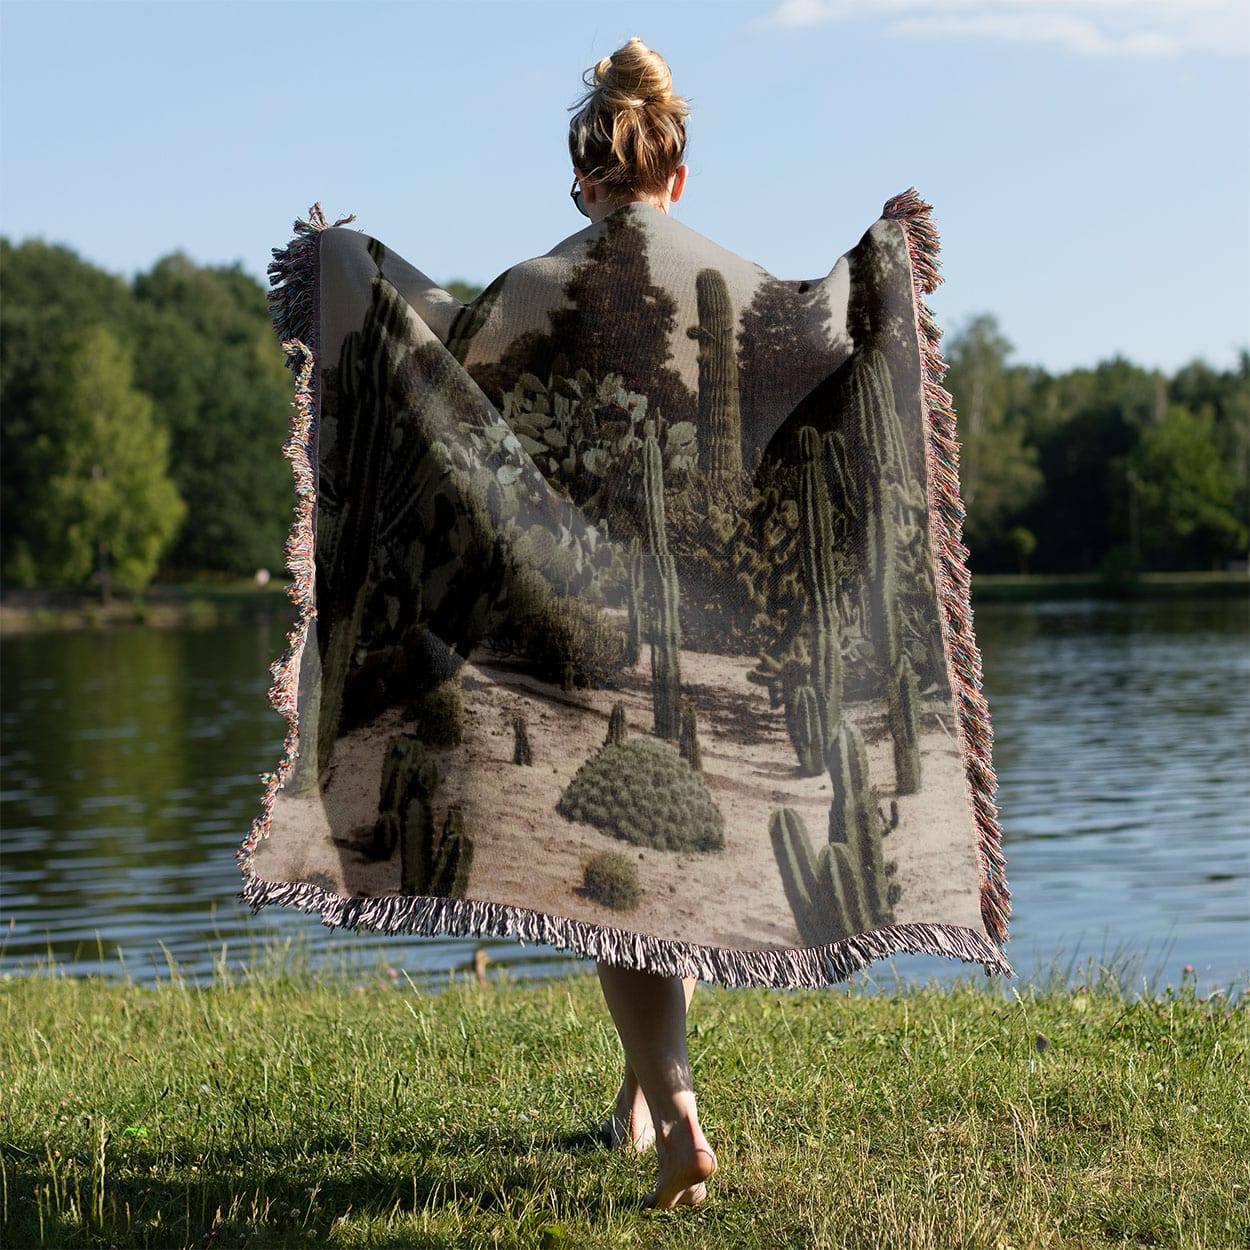 Desert Landscape Woven Blanket Held on a Woman's Back Outside